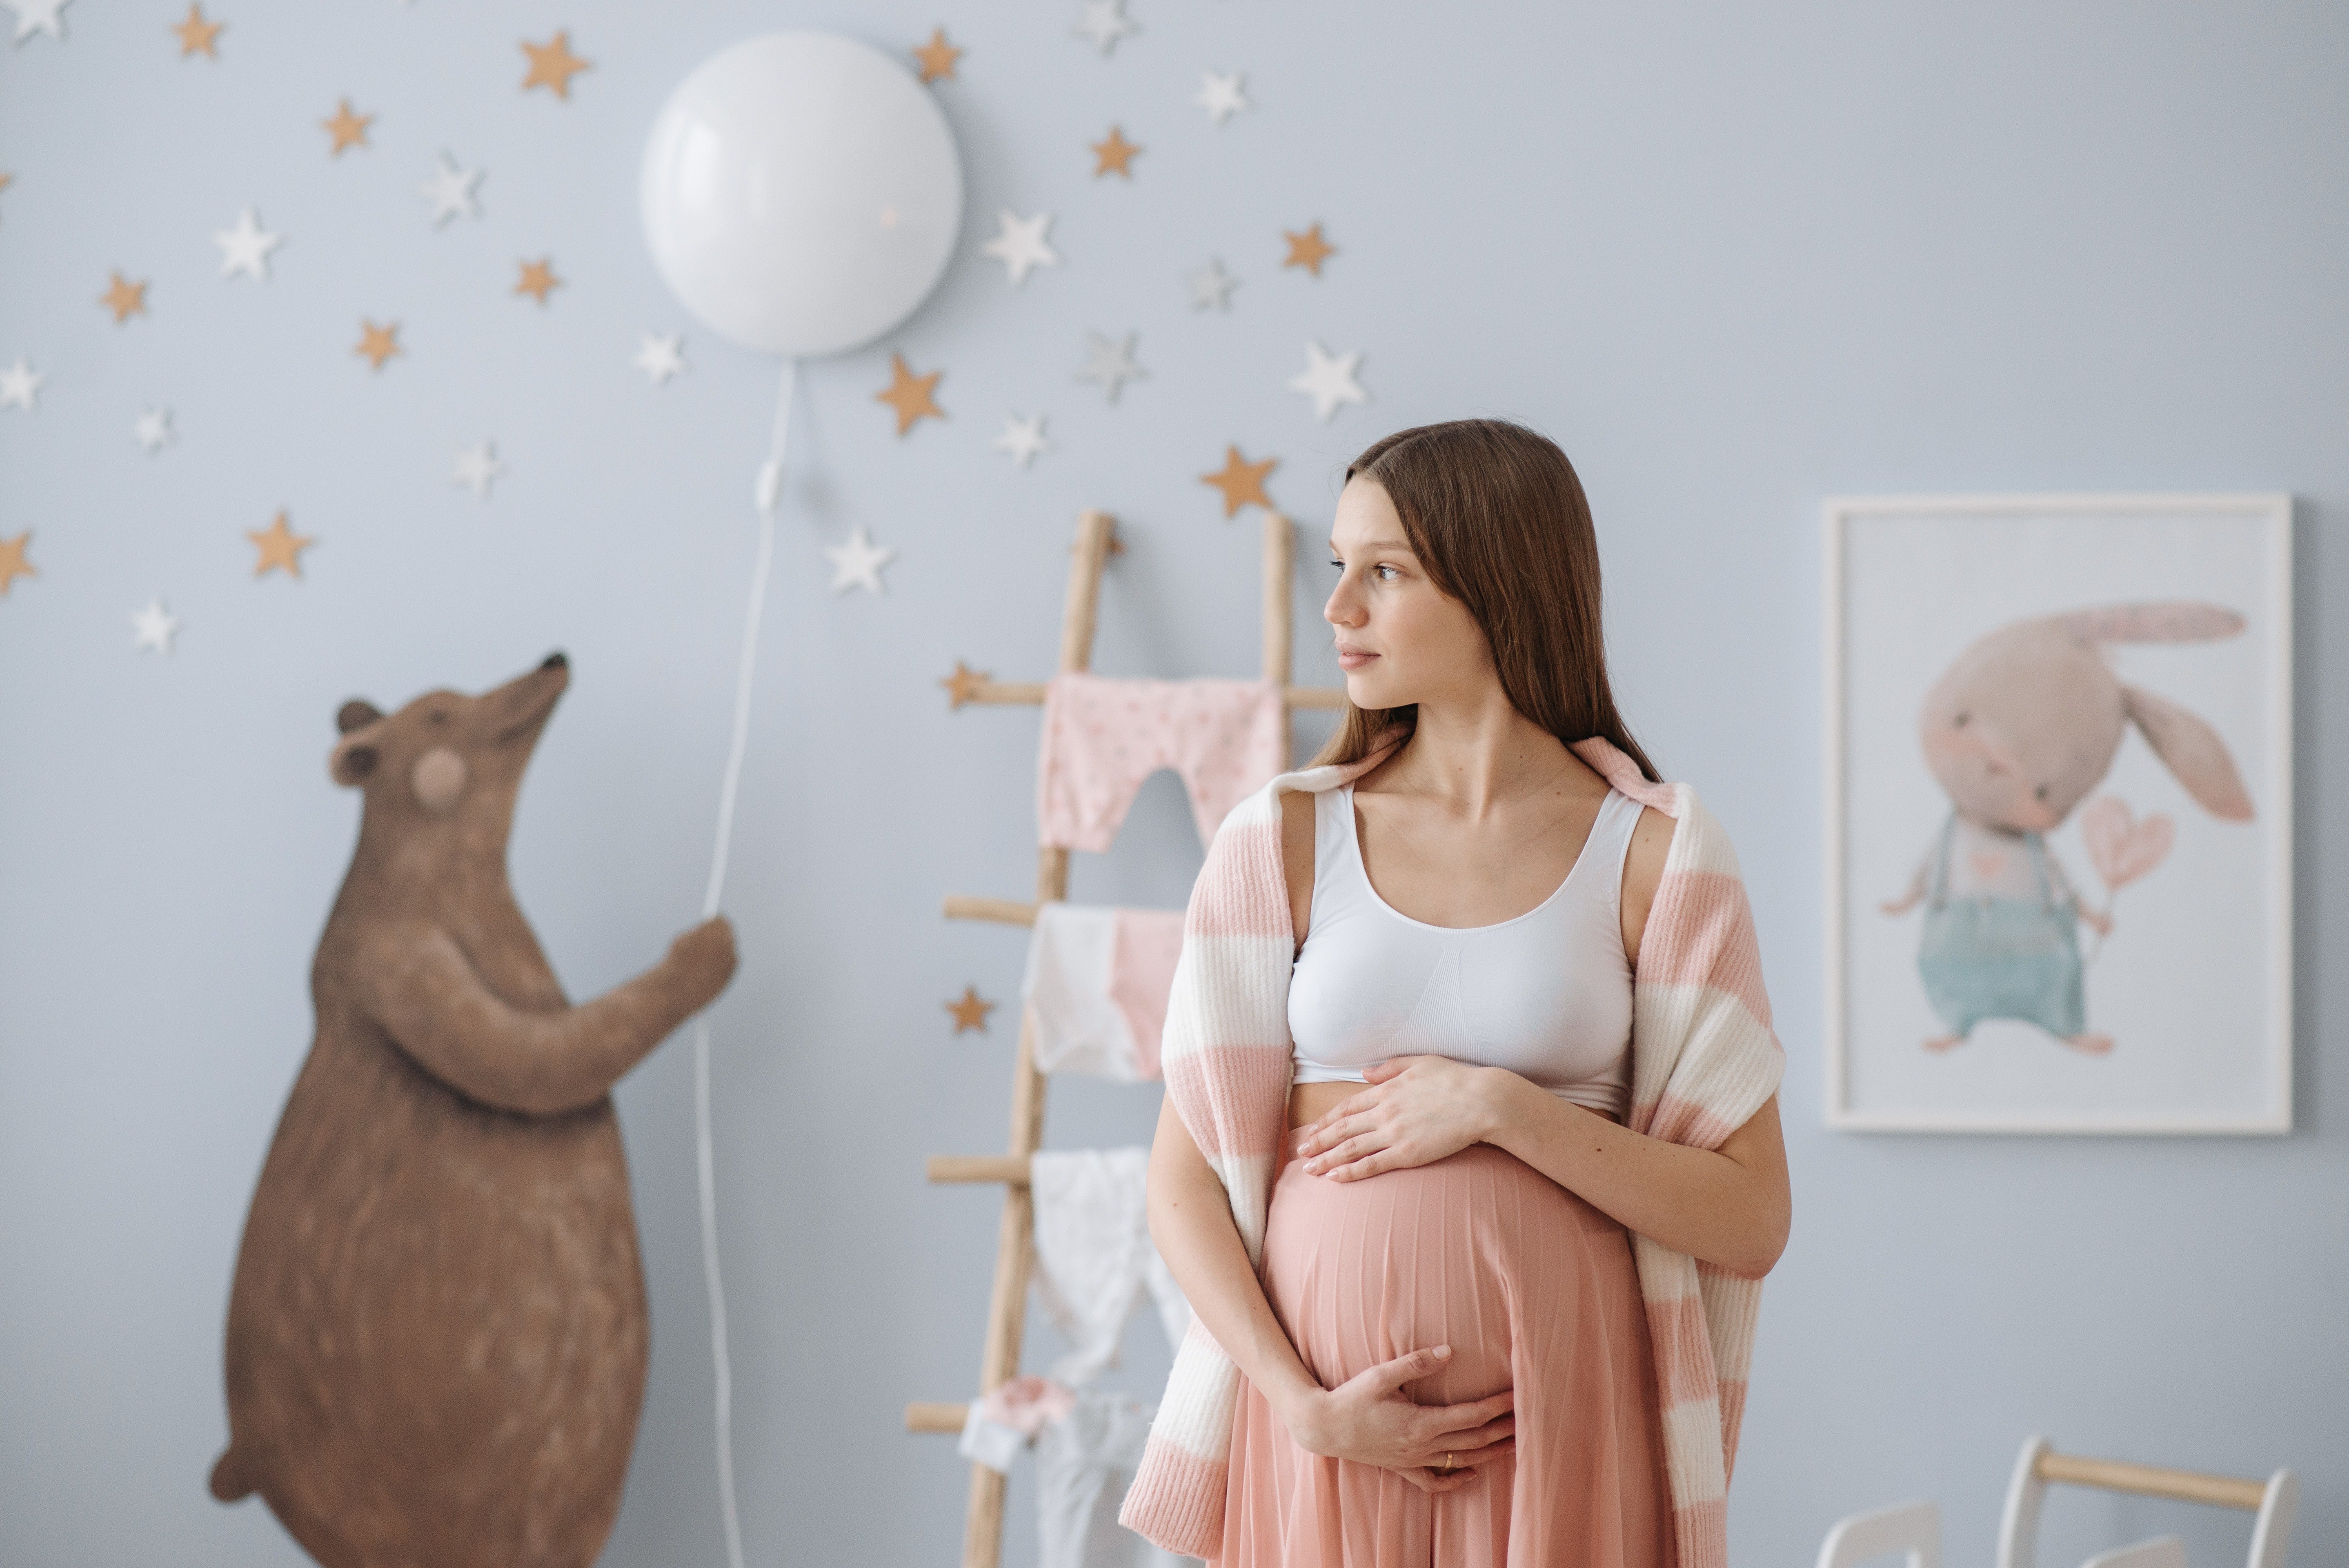 Kate didn't terminate her pregnancy | Photo: Pexels